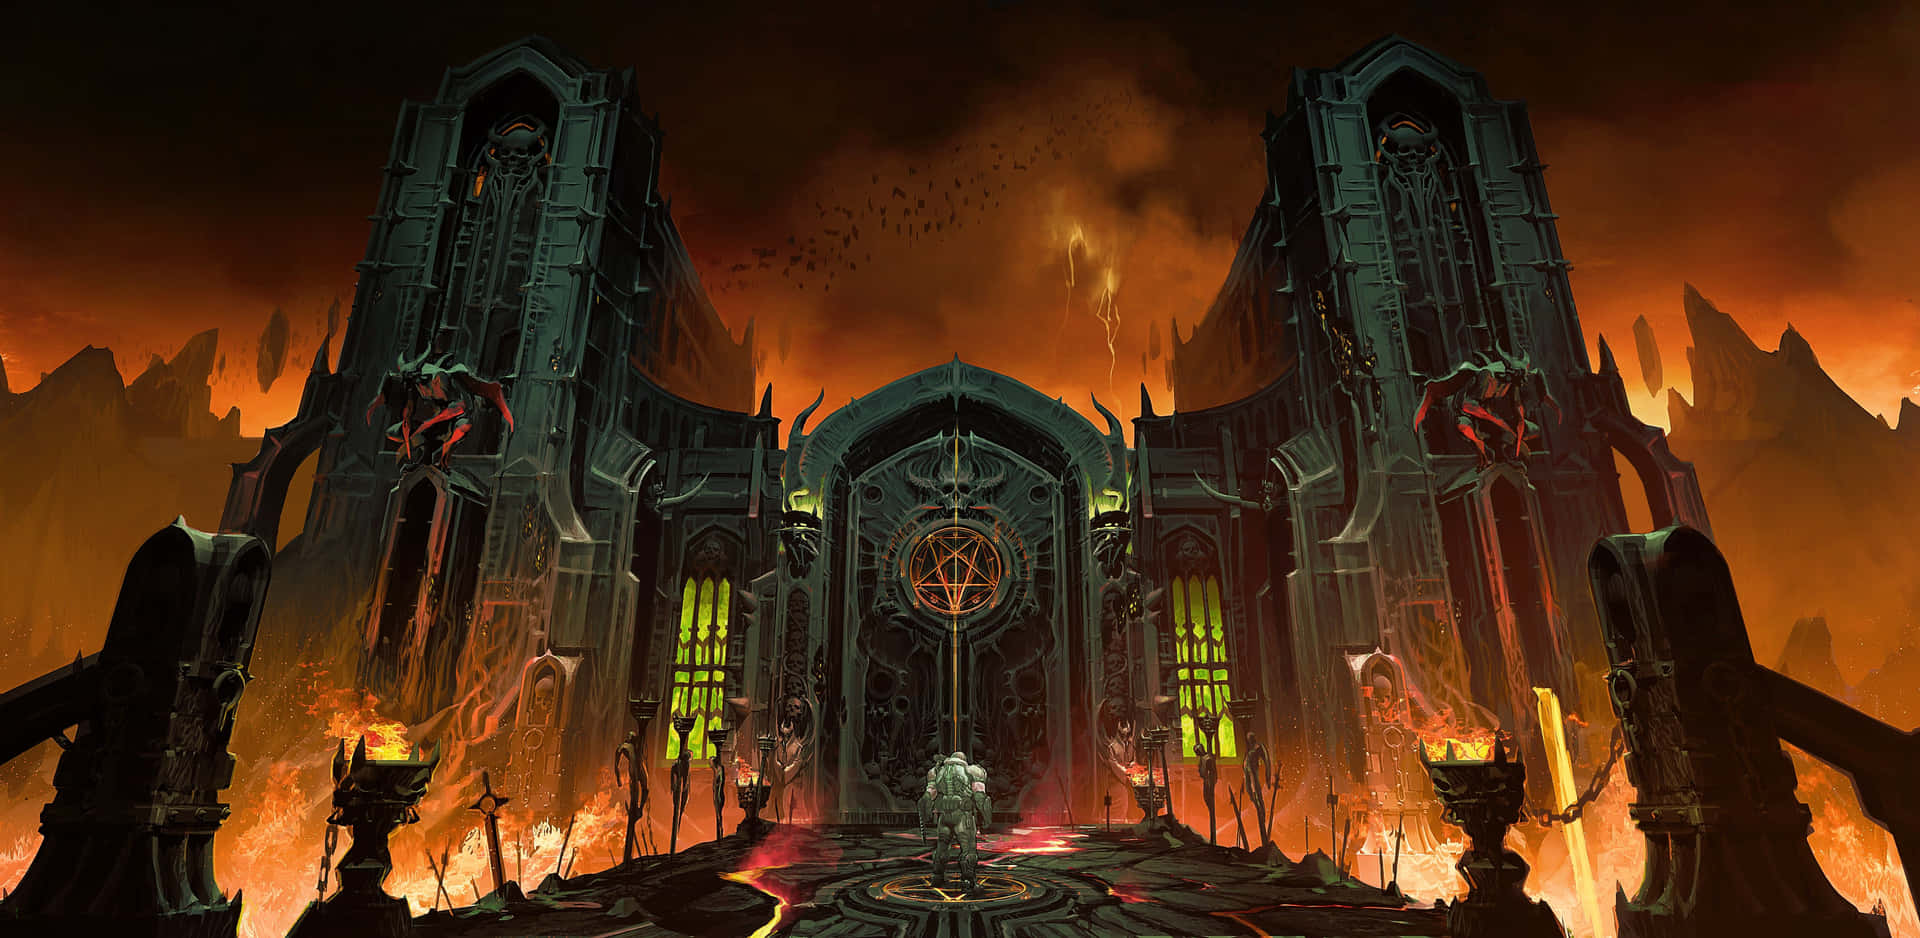 Doometernal - Slayer Che Combatte Demoni In Un Regno Infernale.